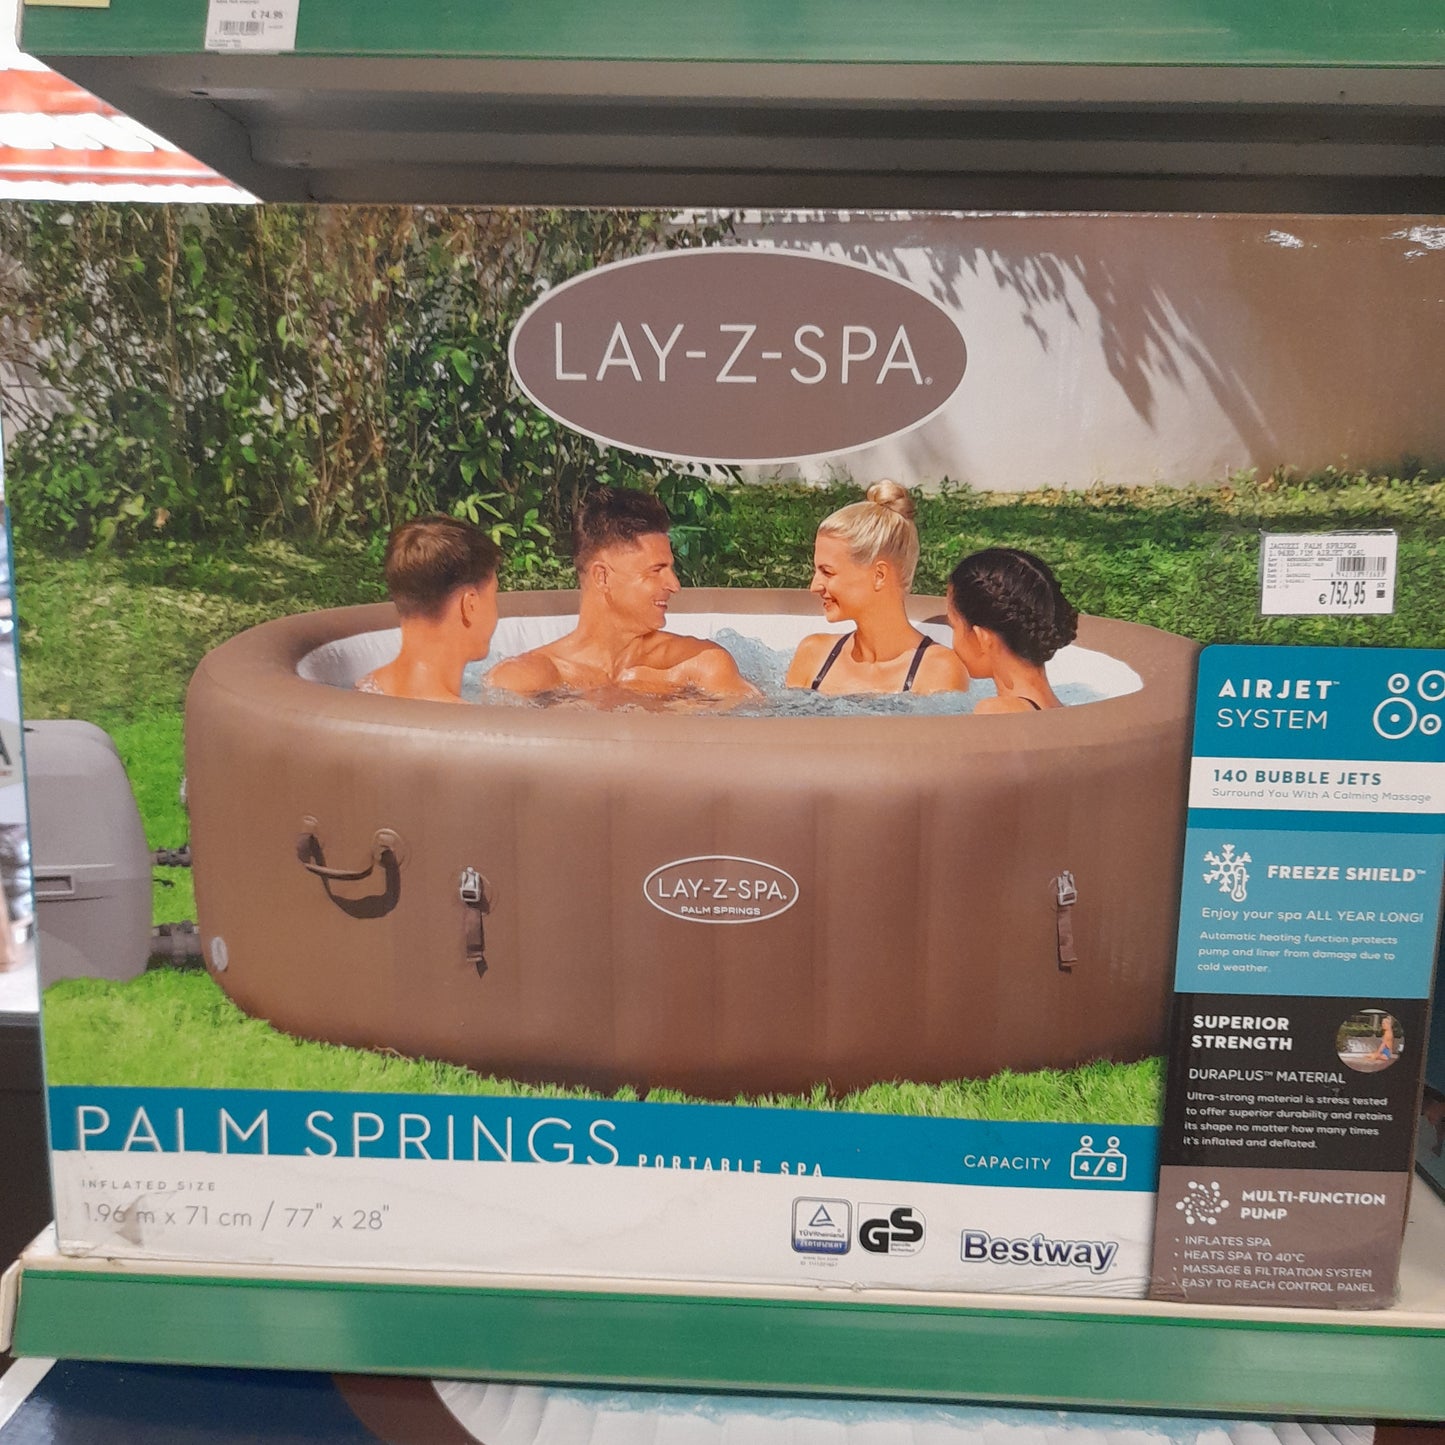 Best way lay-z spa palm springs